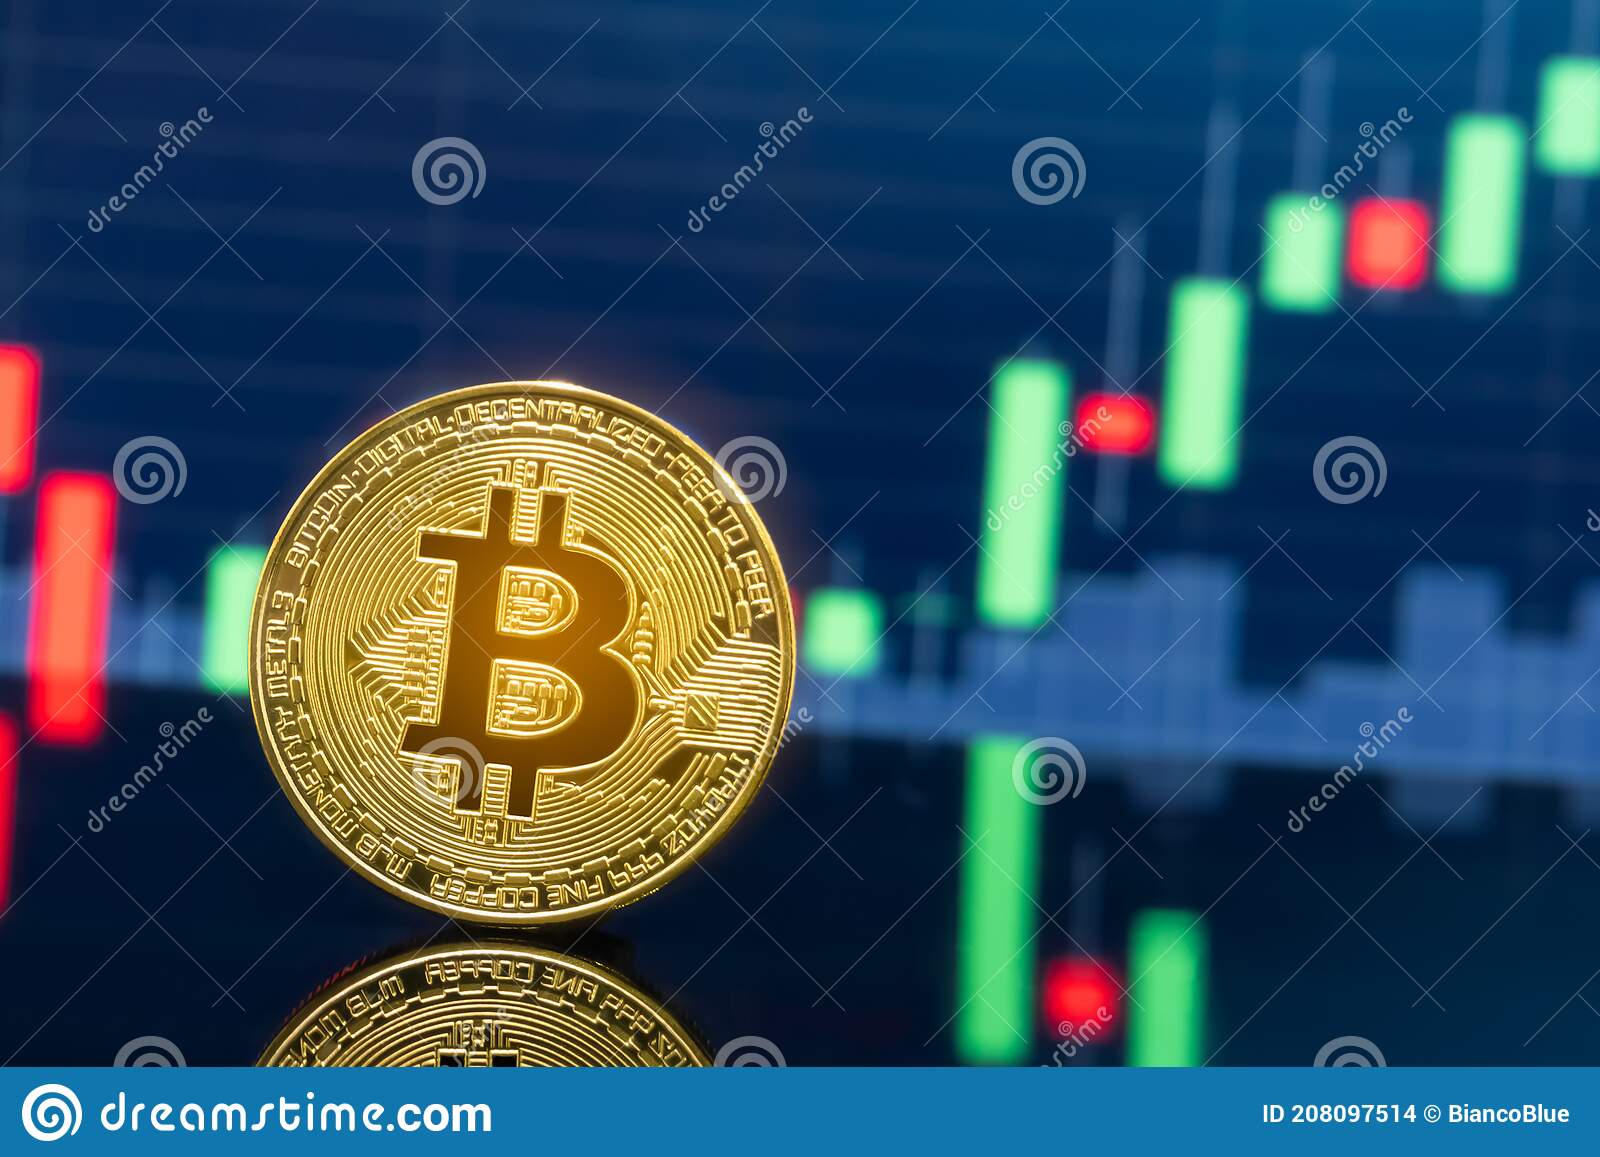 bitcoin trader 250 deposito